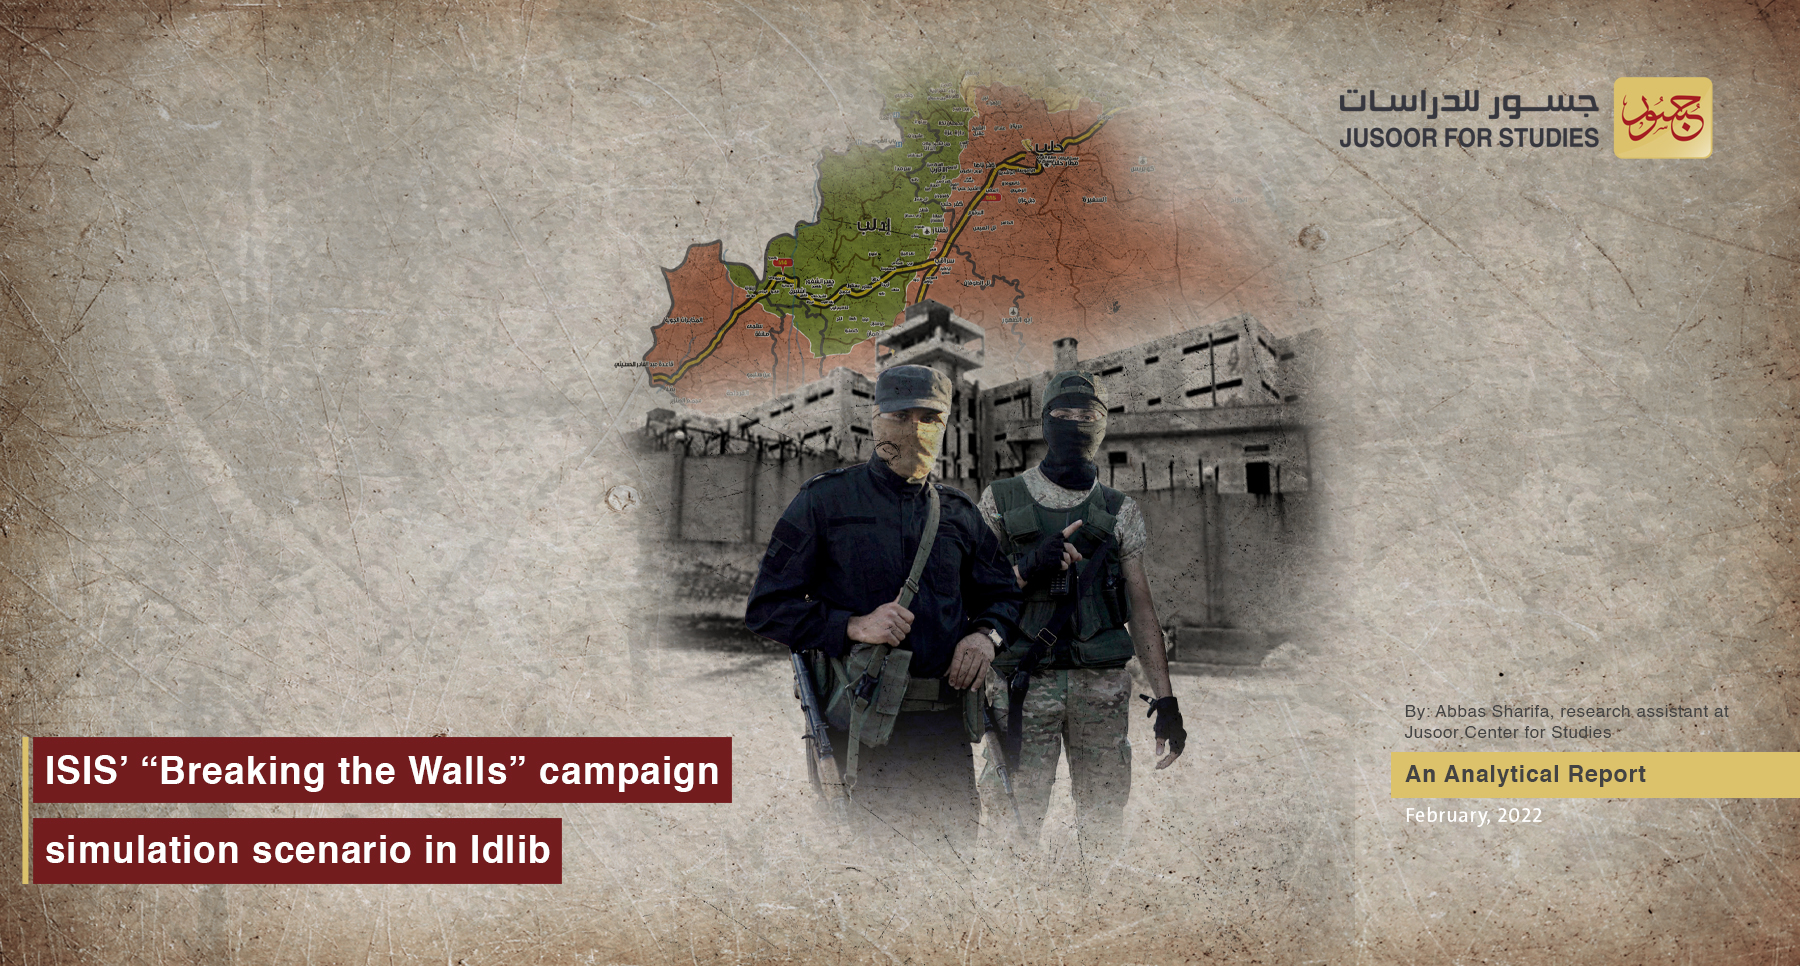 ISIS’ “Breaking the Walls” campaign simulation scenario in Idlib